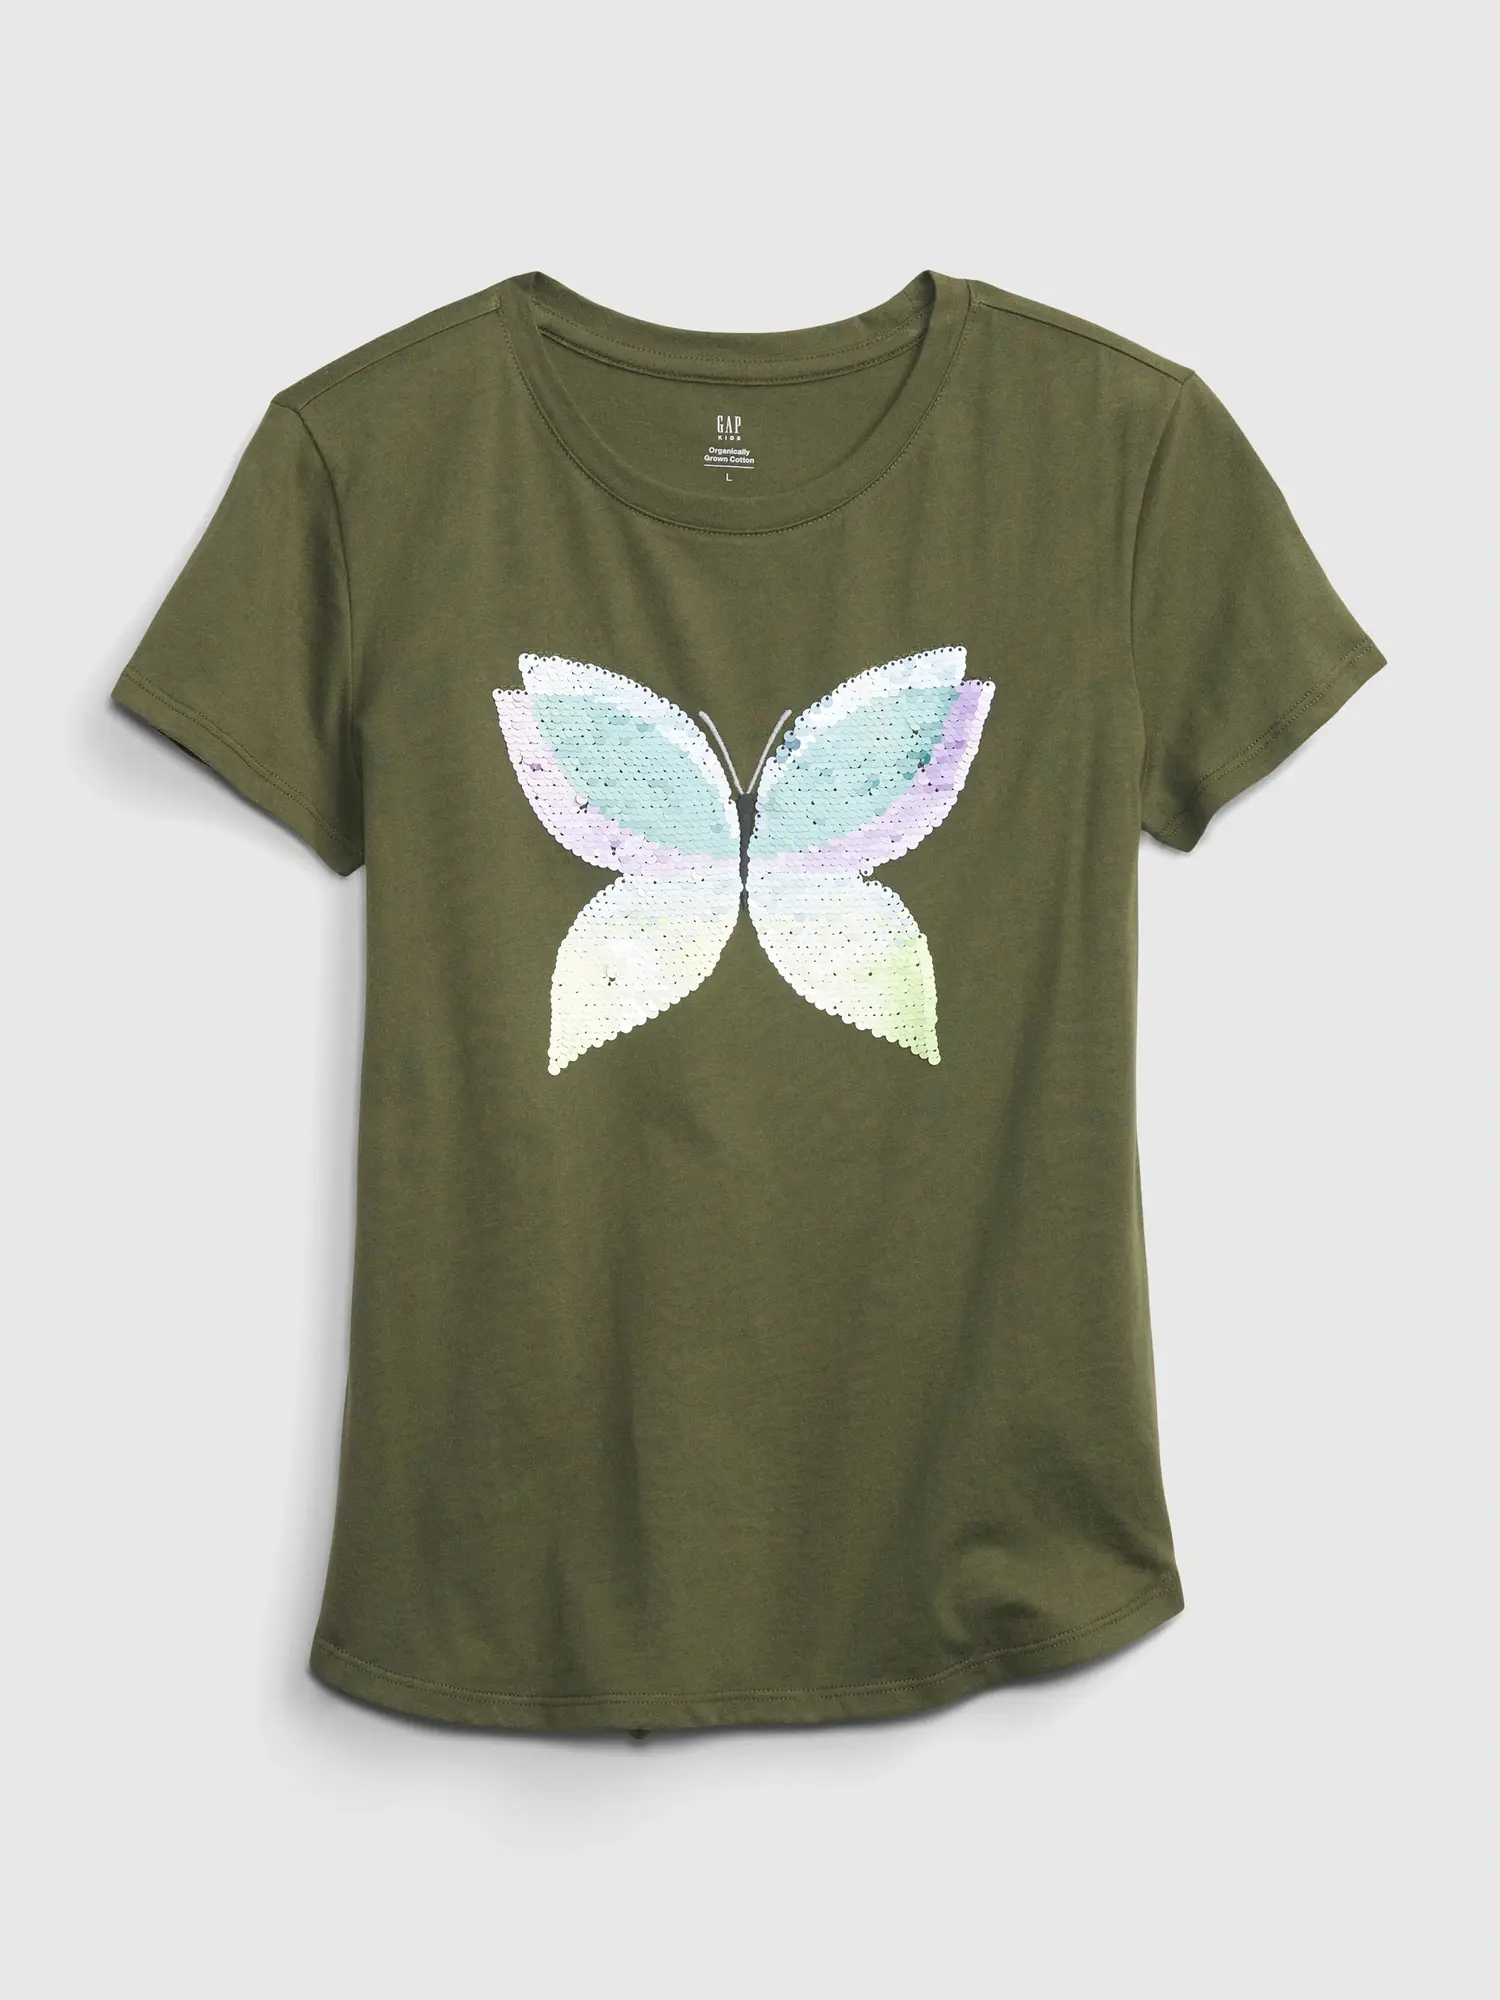 Gap Kids 100% Organic Cotton Interactive Graphic T-Shirt green. 1